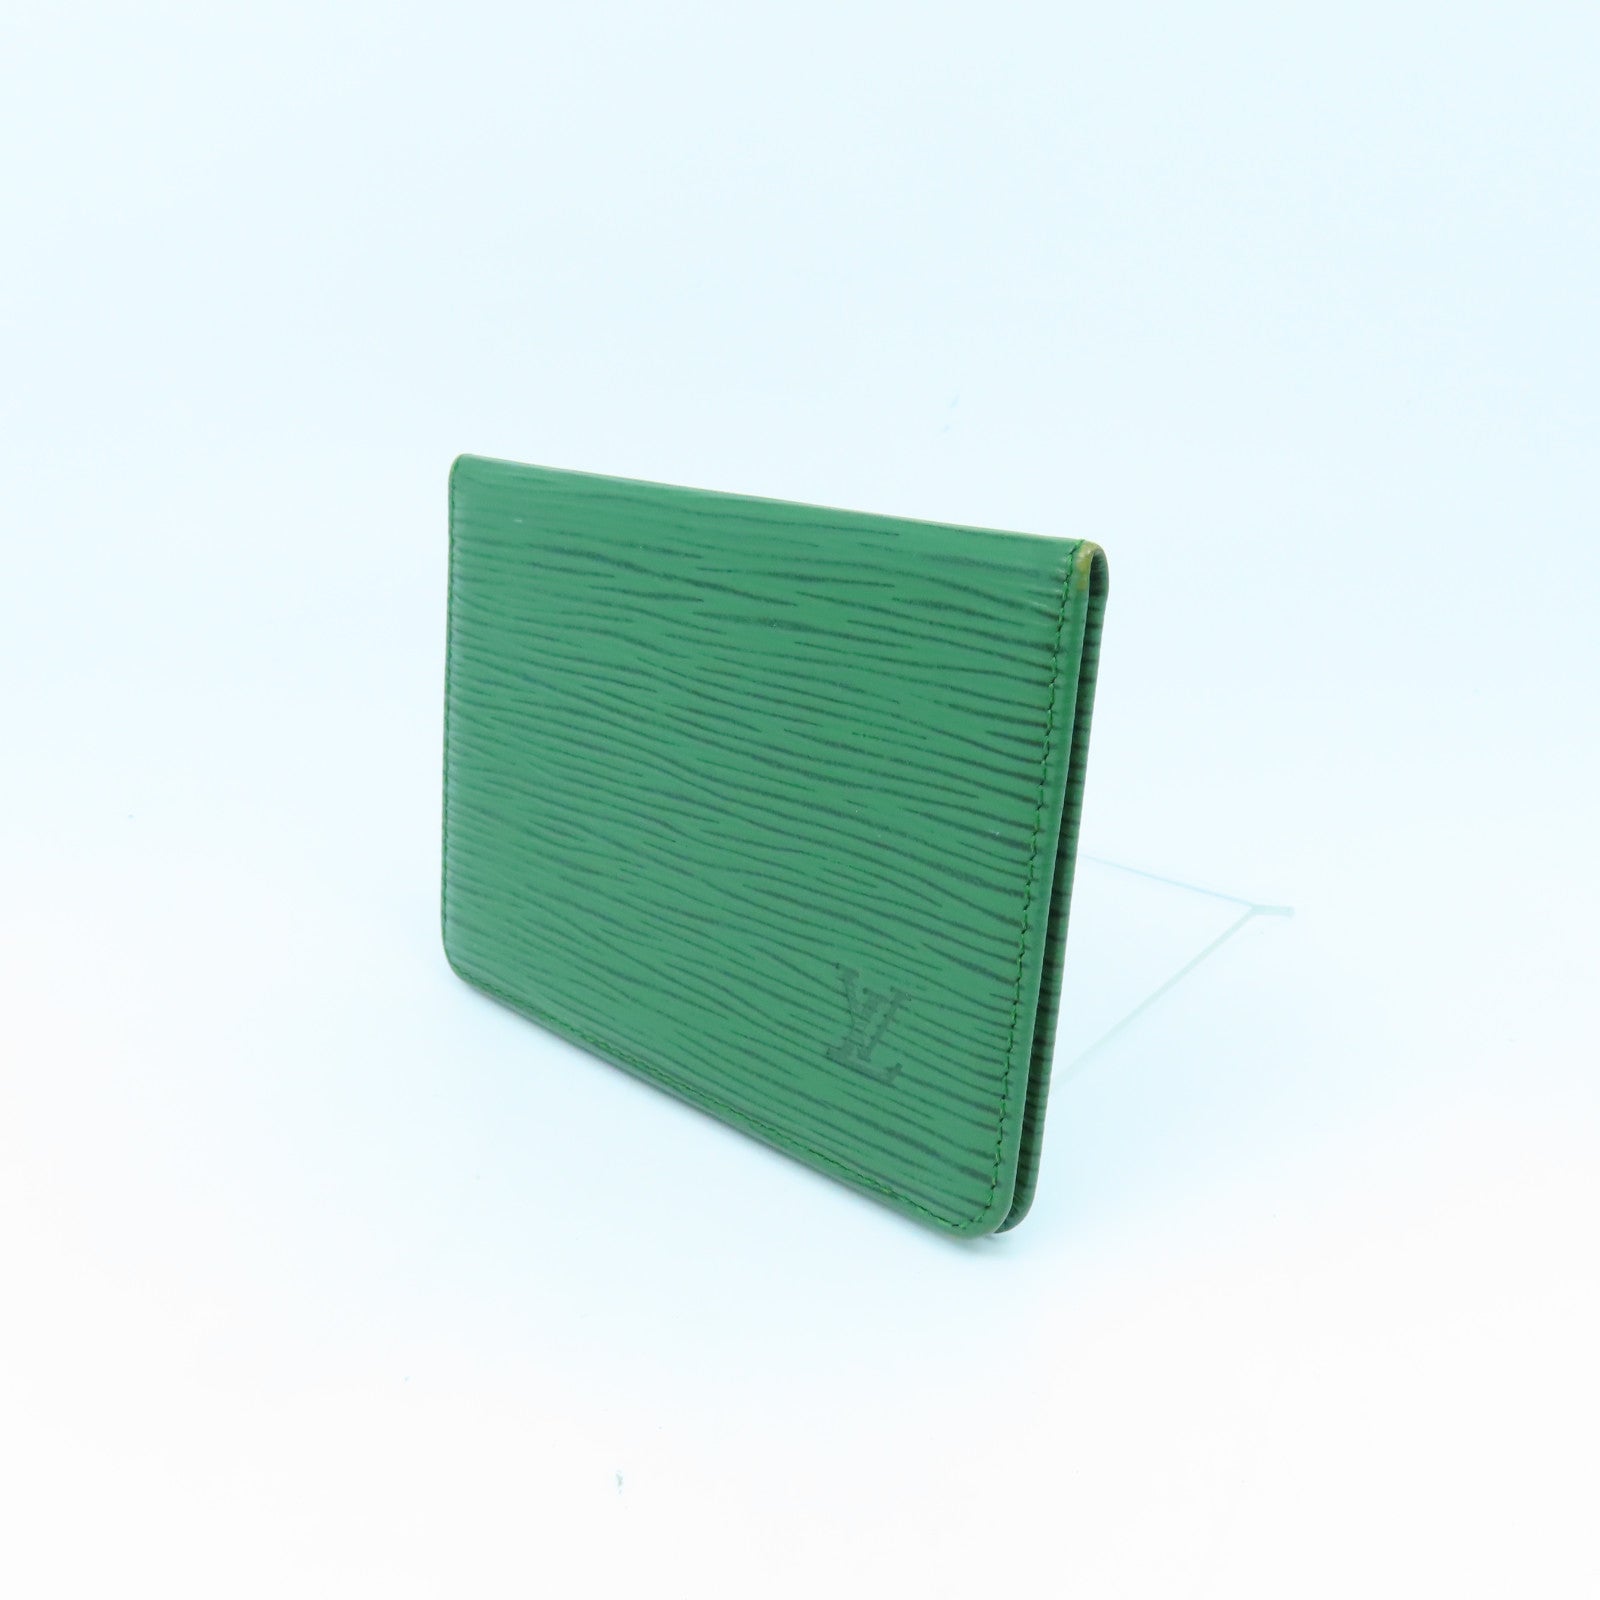 LOUIS VUITTON LV Card Case M63204 Epi Leather Green